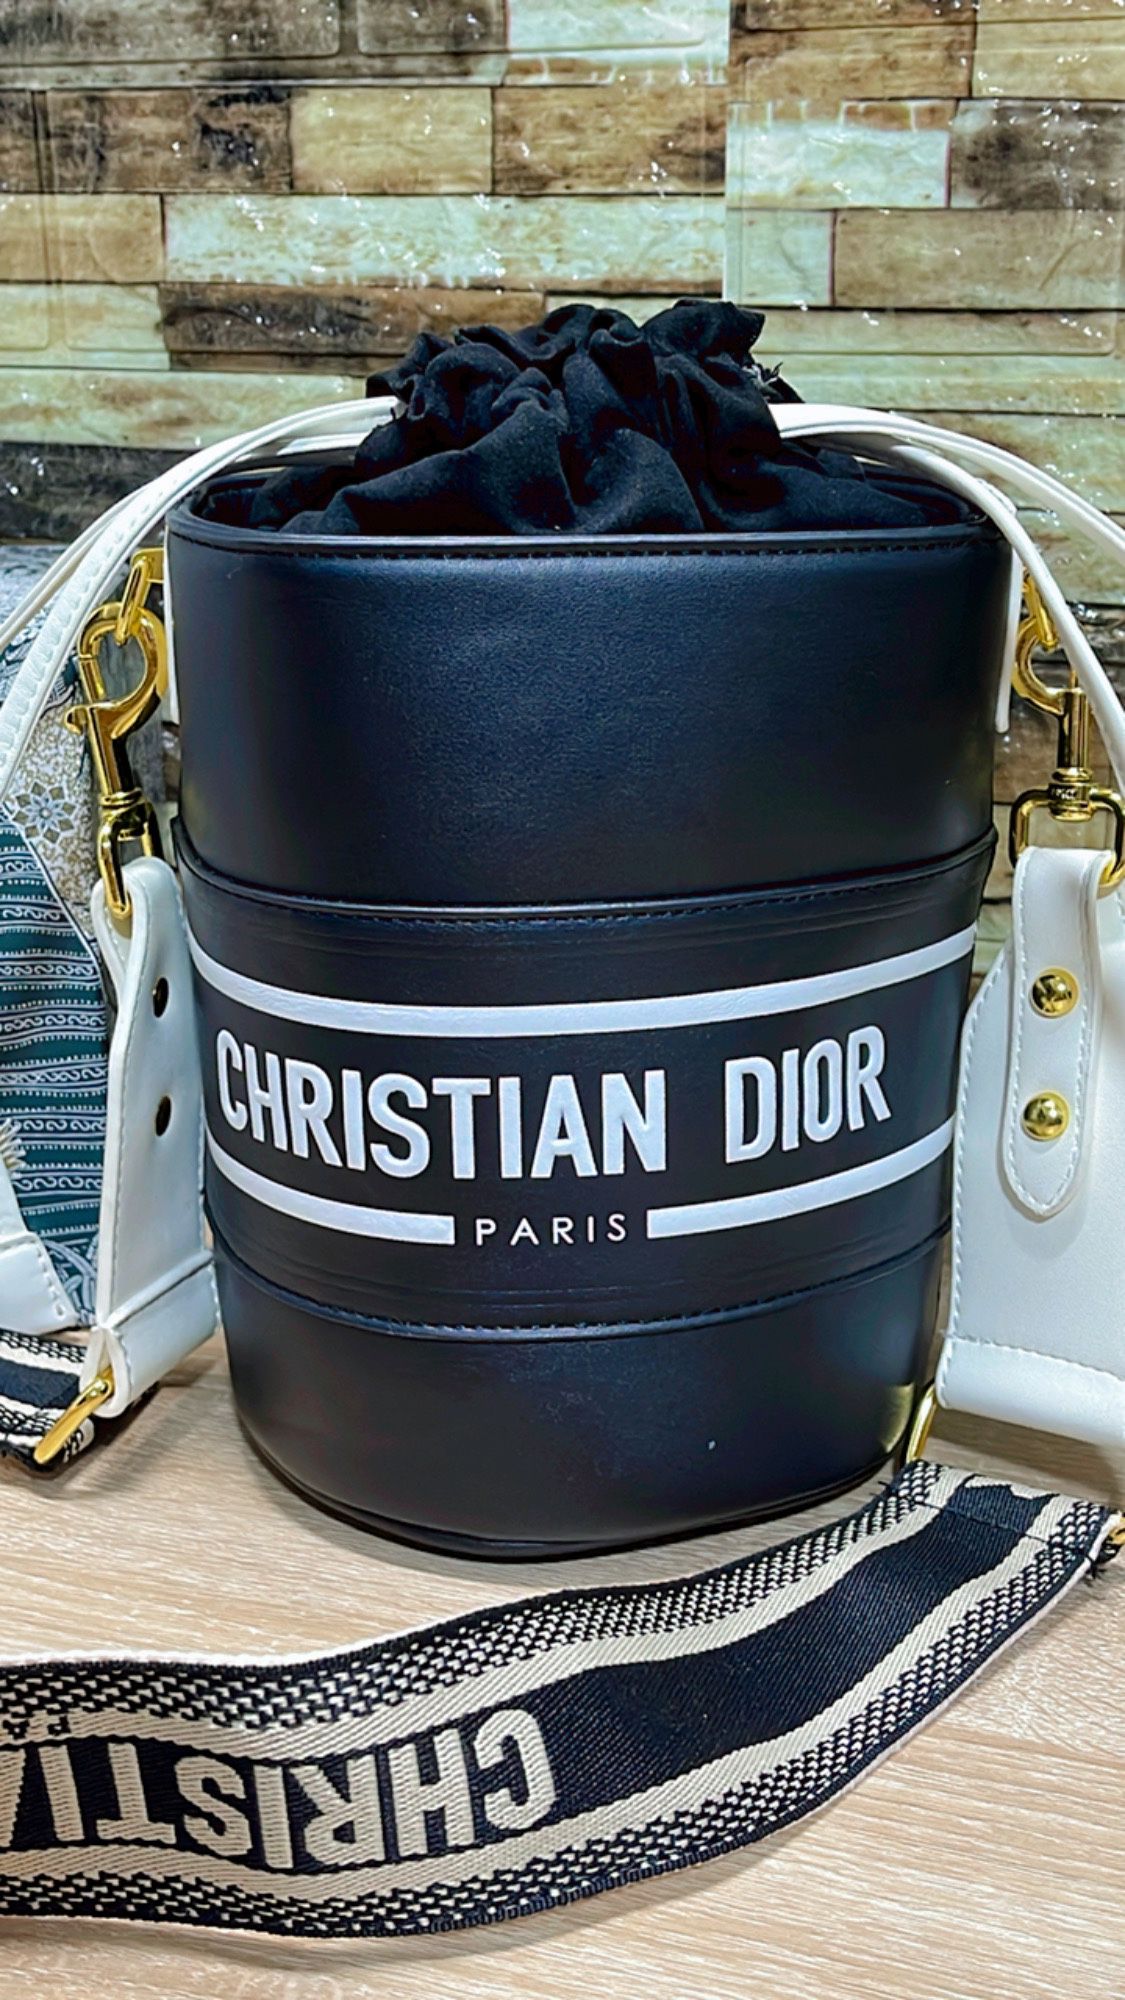 Cristian Dior Bag